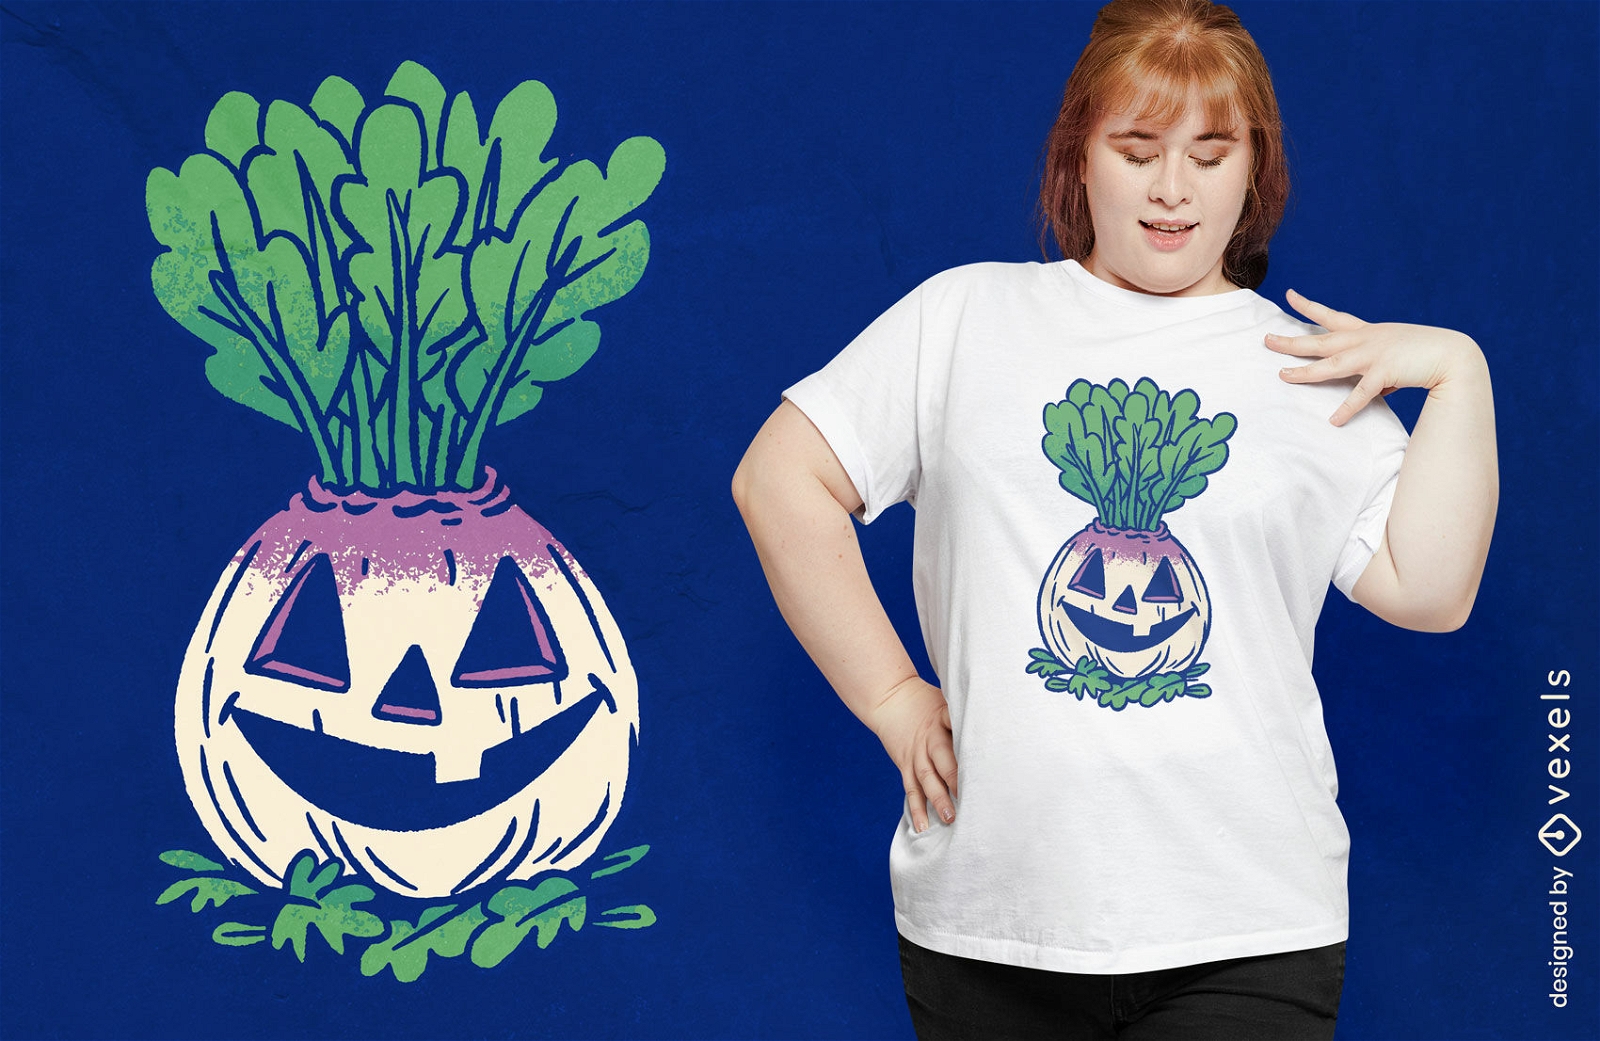 Jack o Lantern R?be Halloween T-Shirt Design